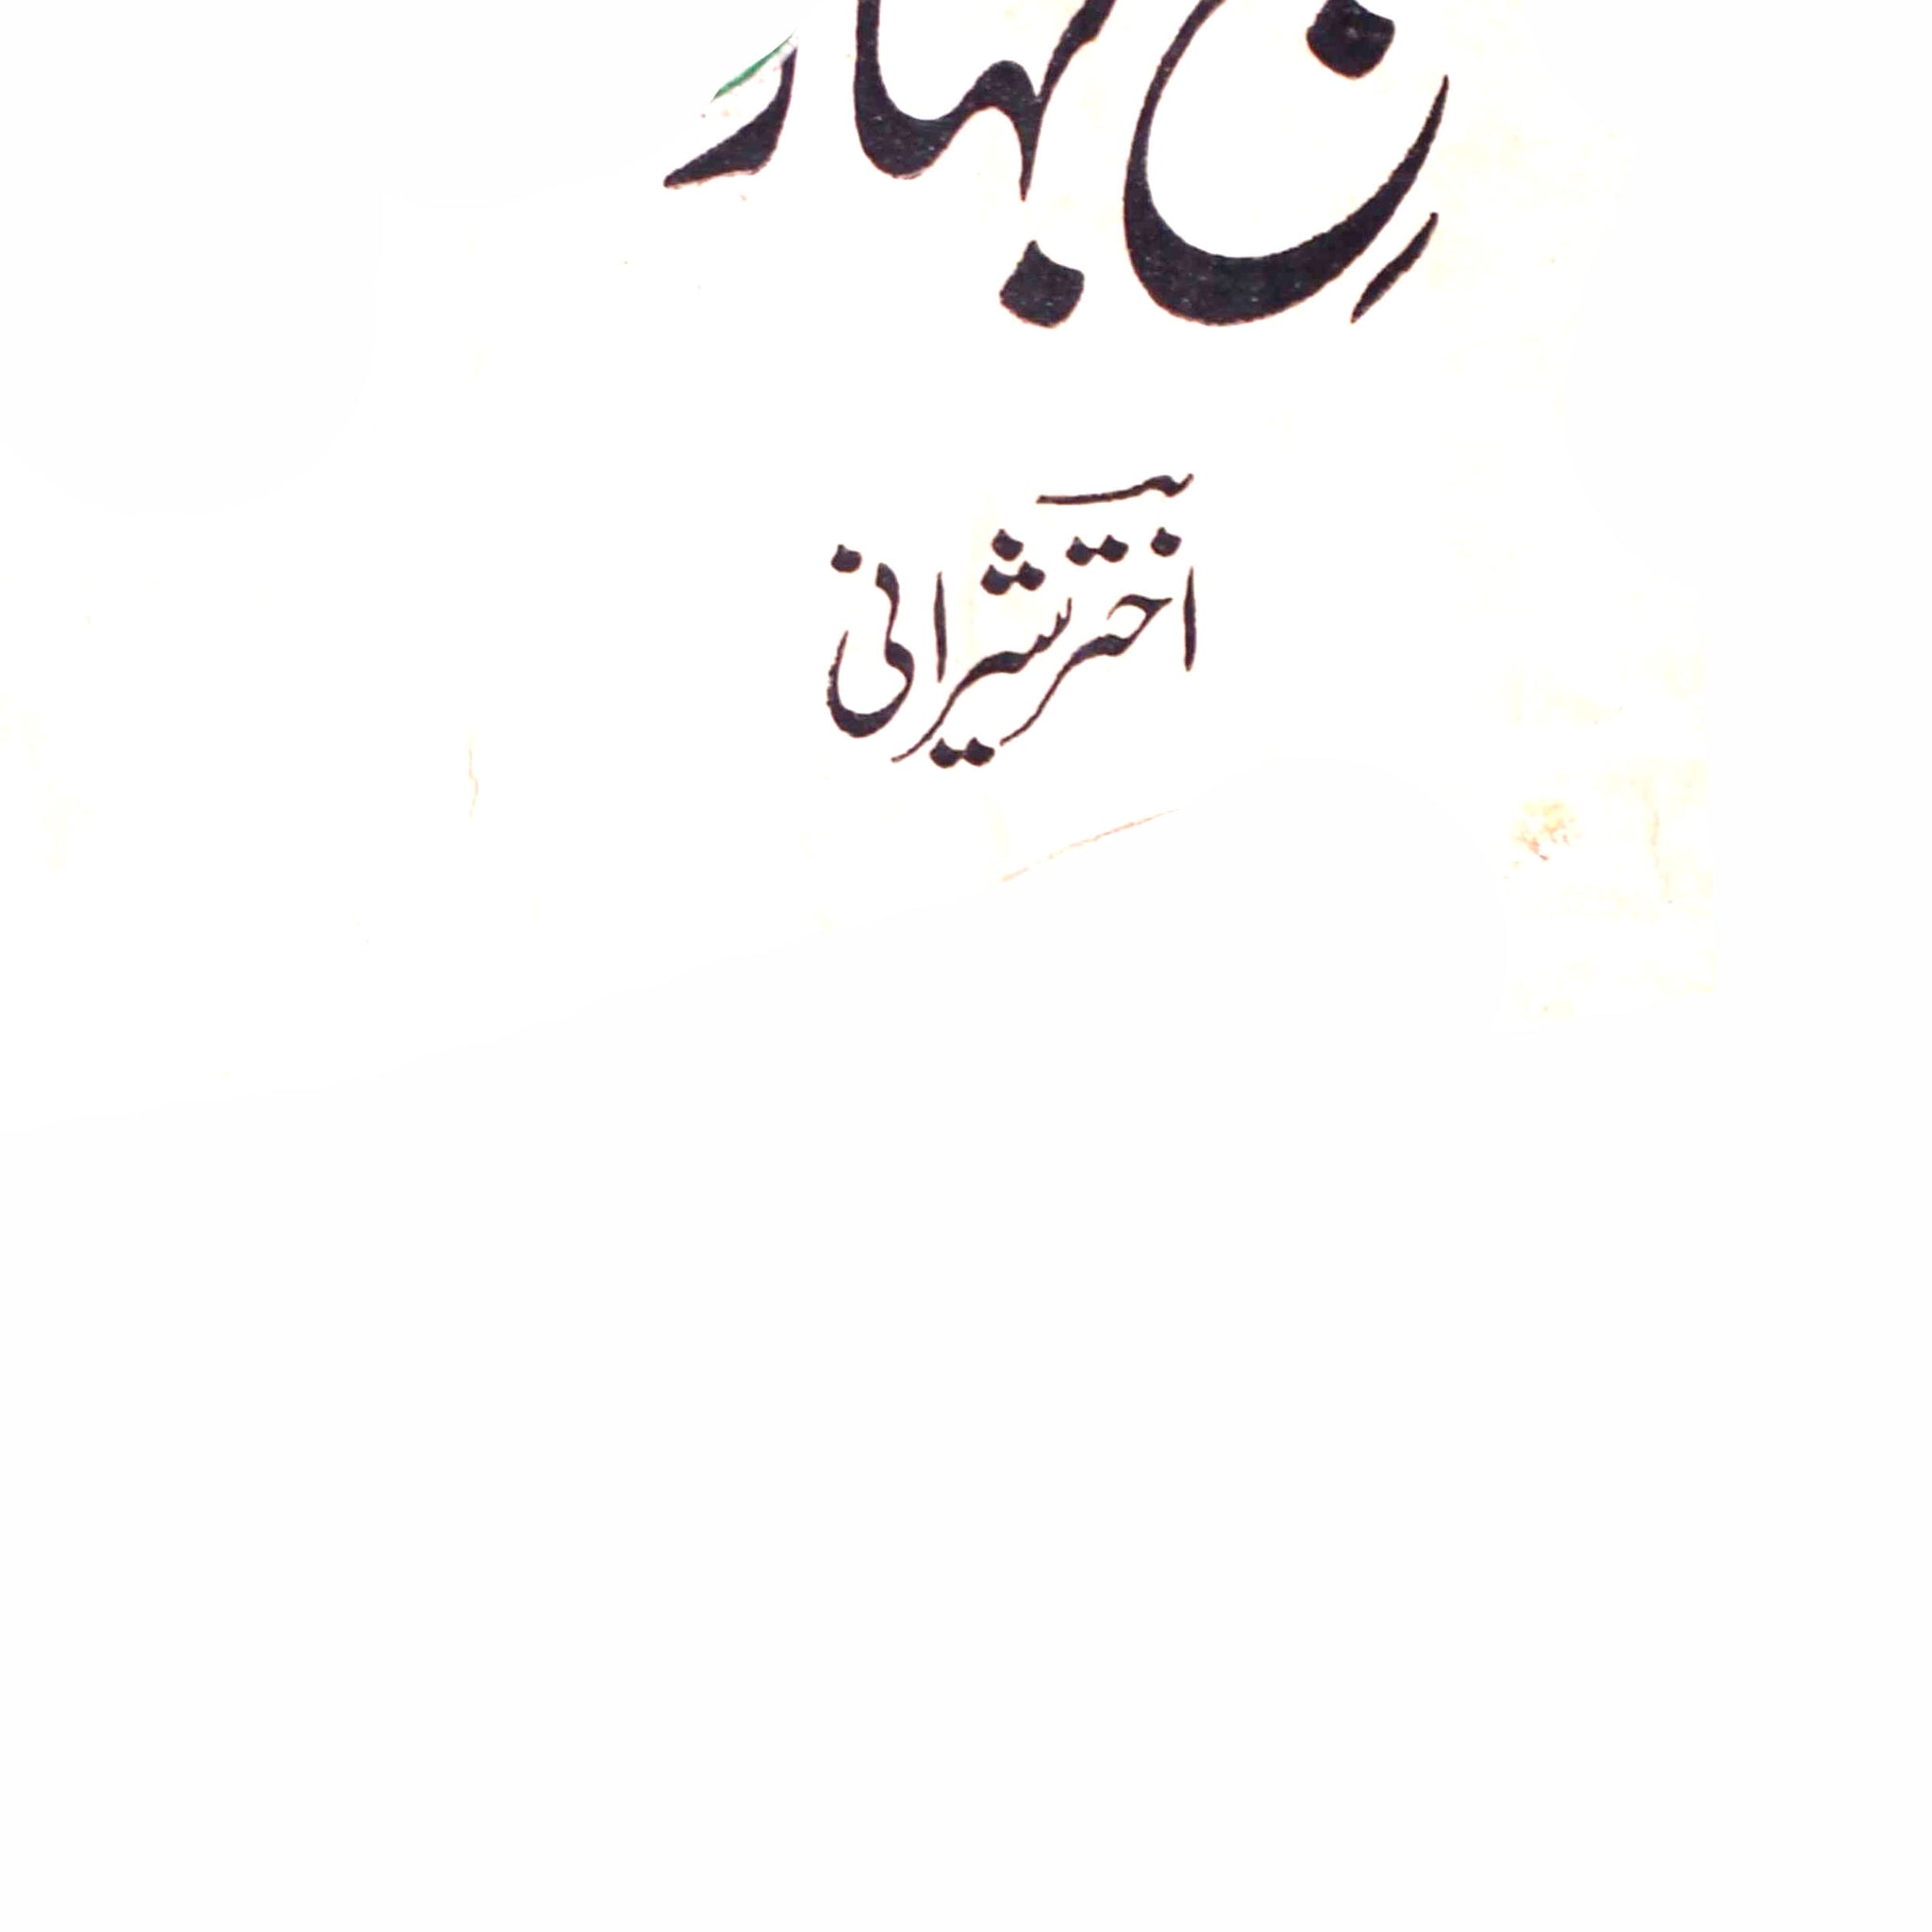 Subah-e-Bahar